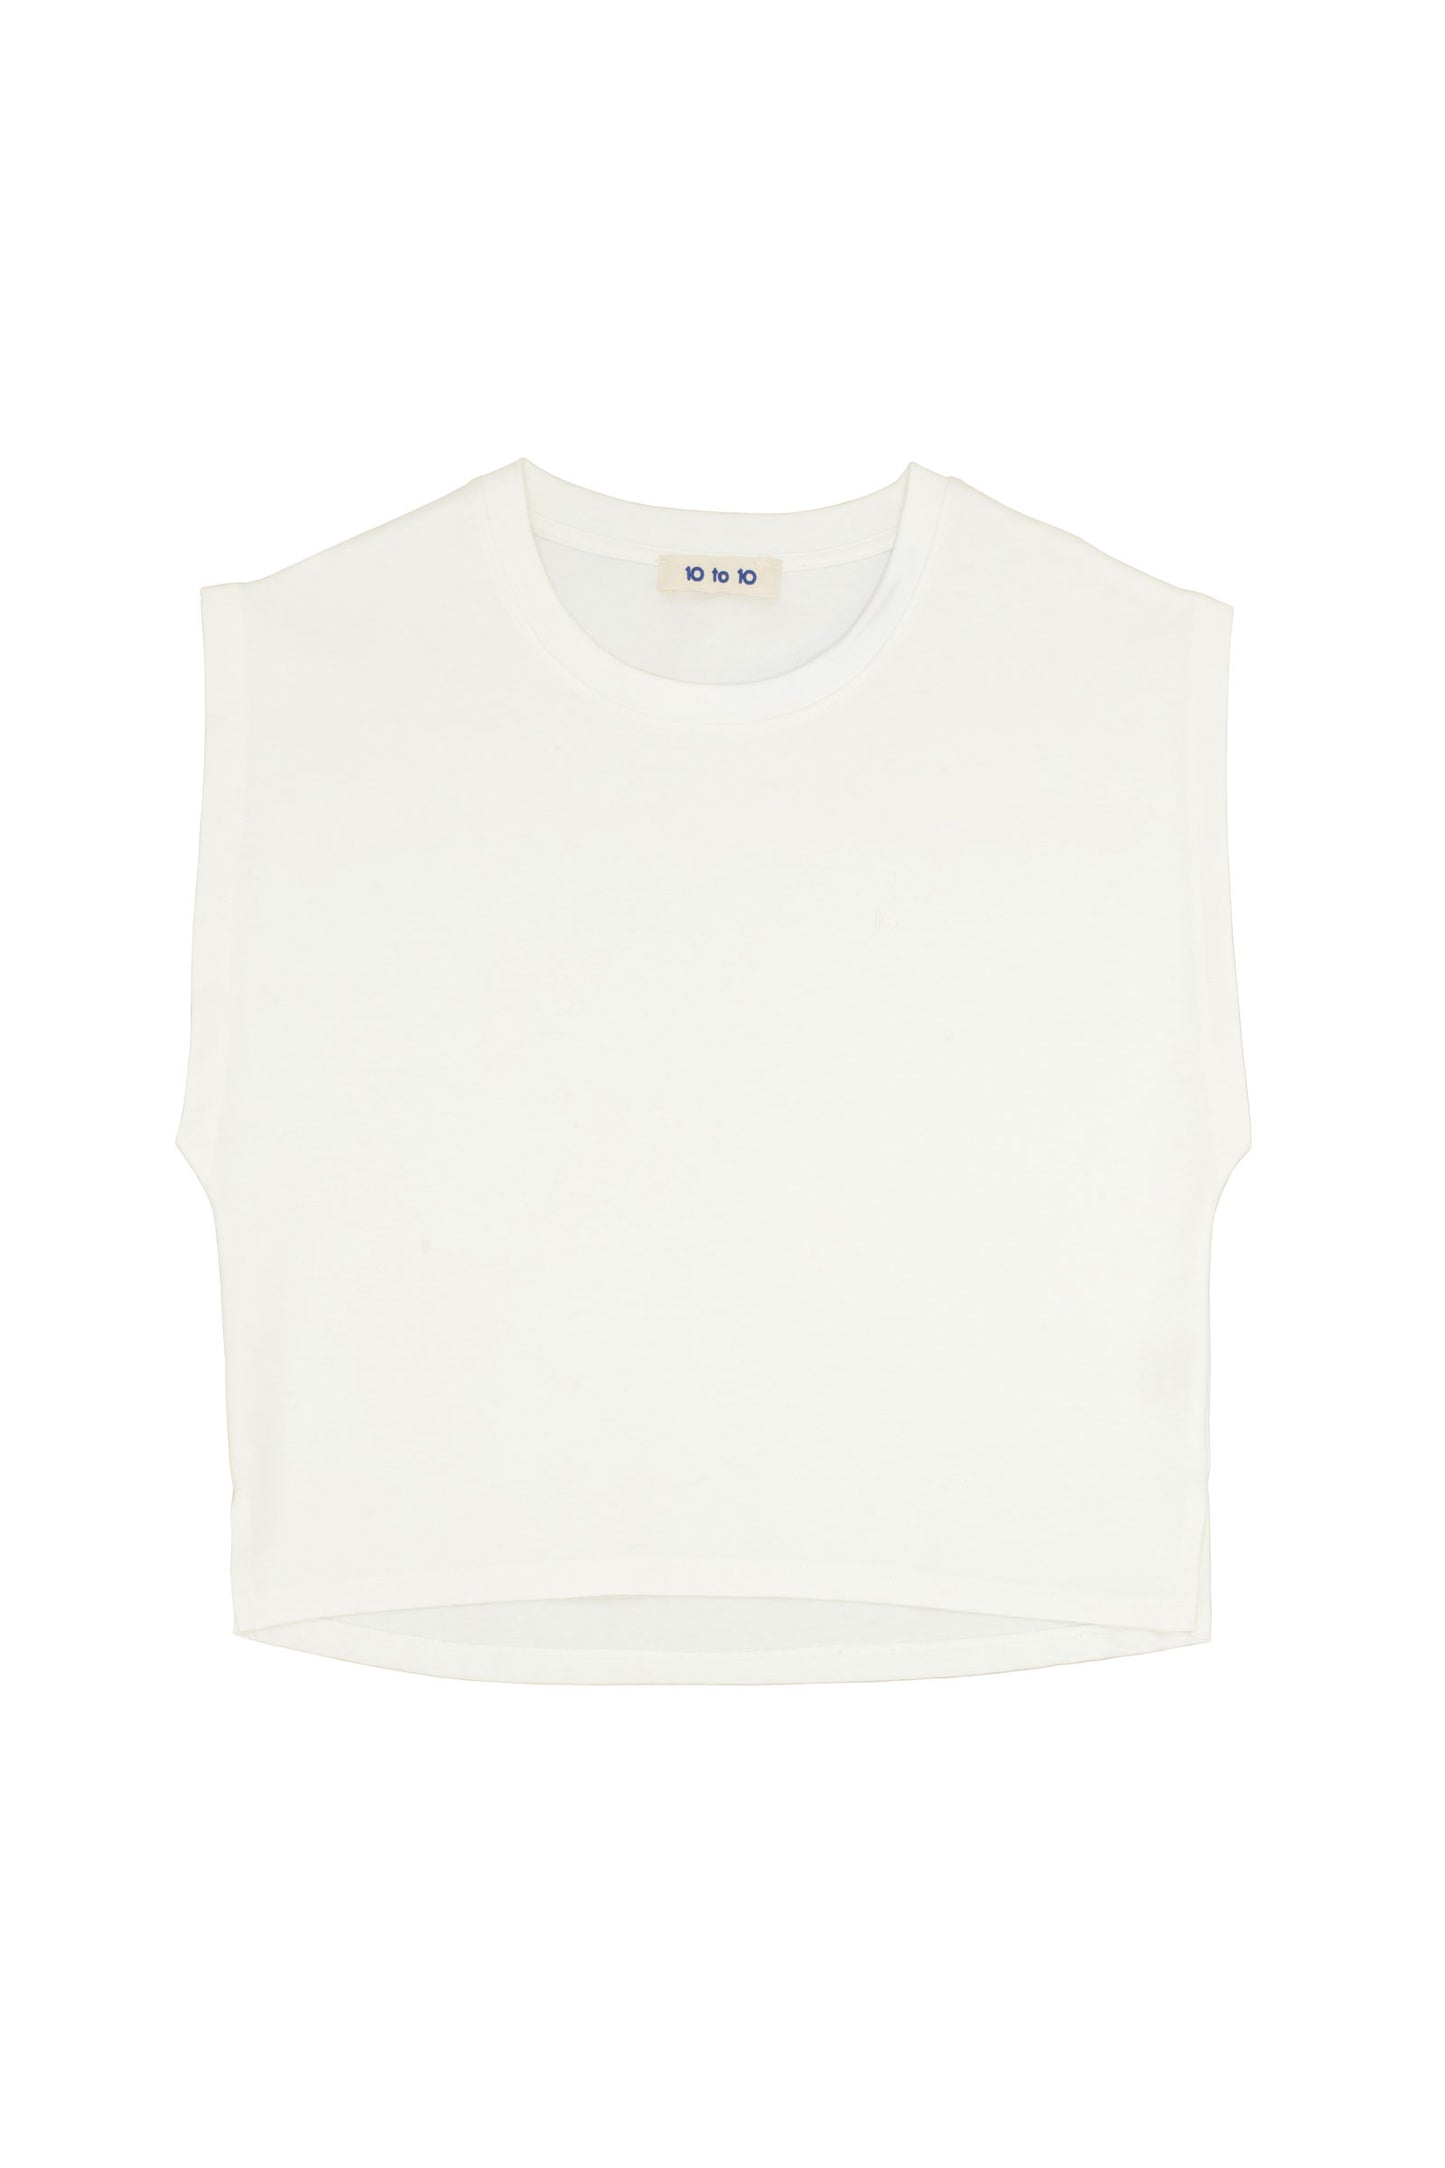 10 to 10 T-Shirt Cavas, Off-White